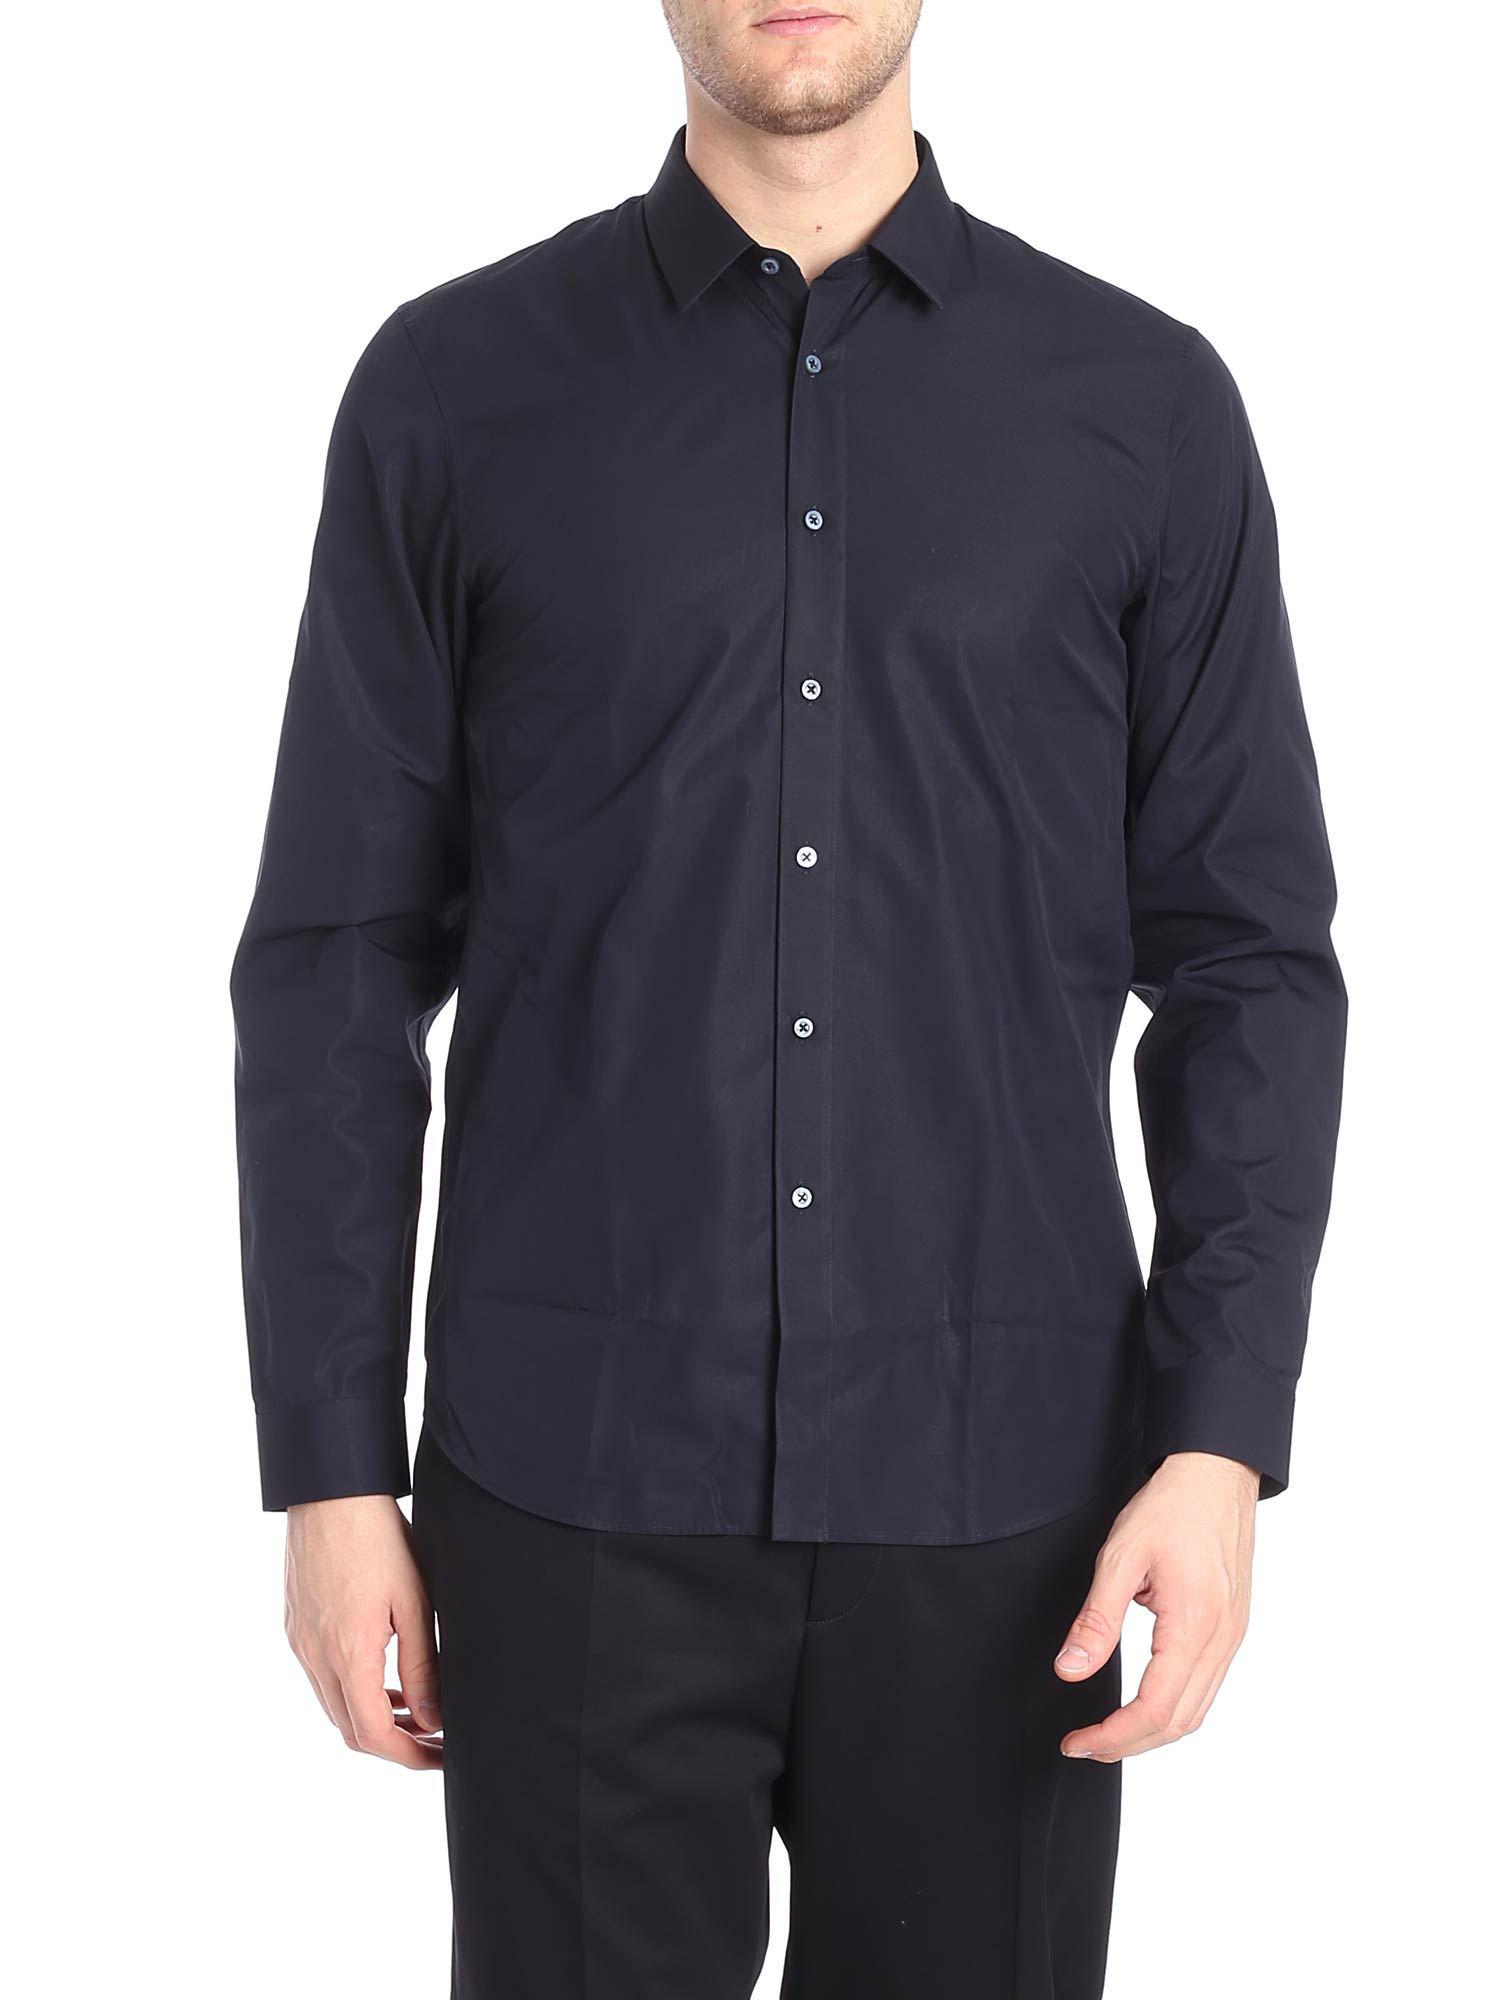 Jil Sander Dark Blue Cotton Poplin Shirt for Men - Lyst